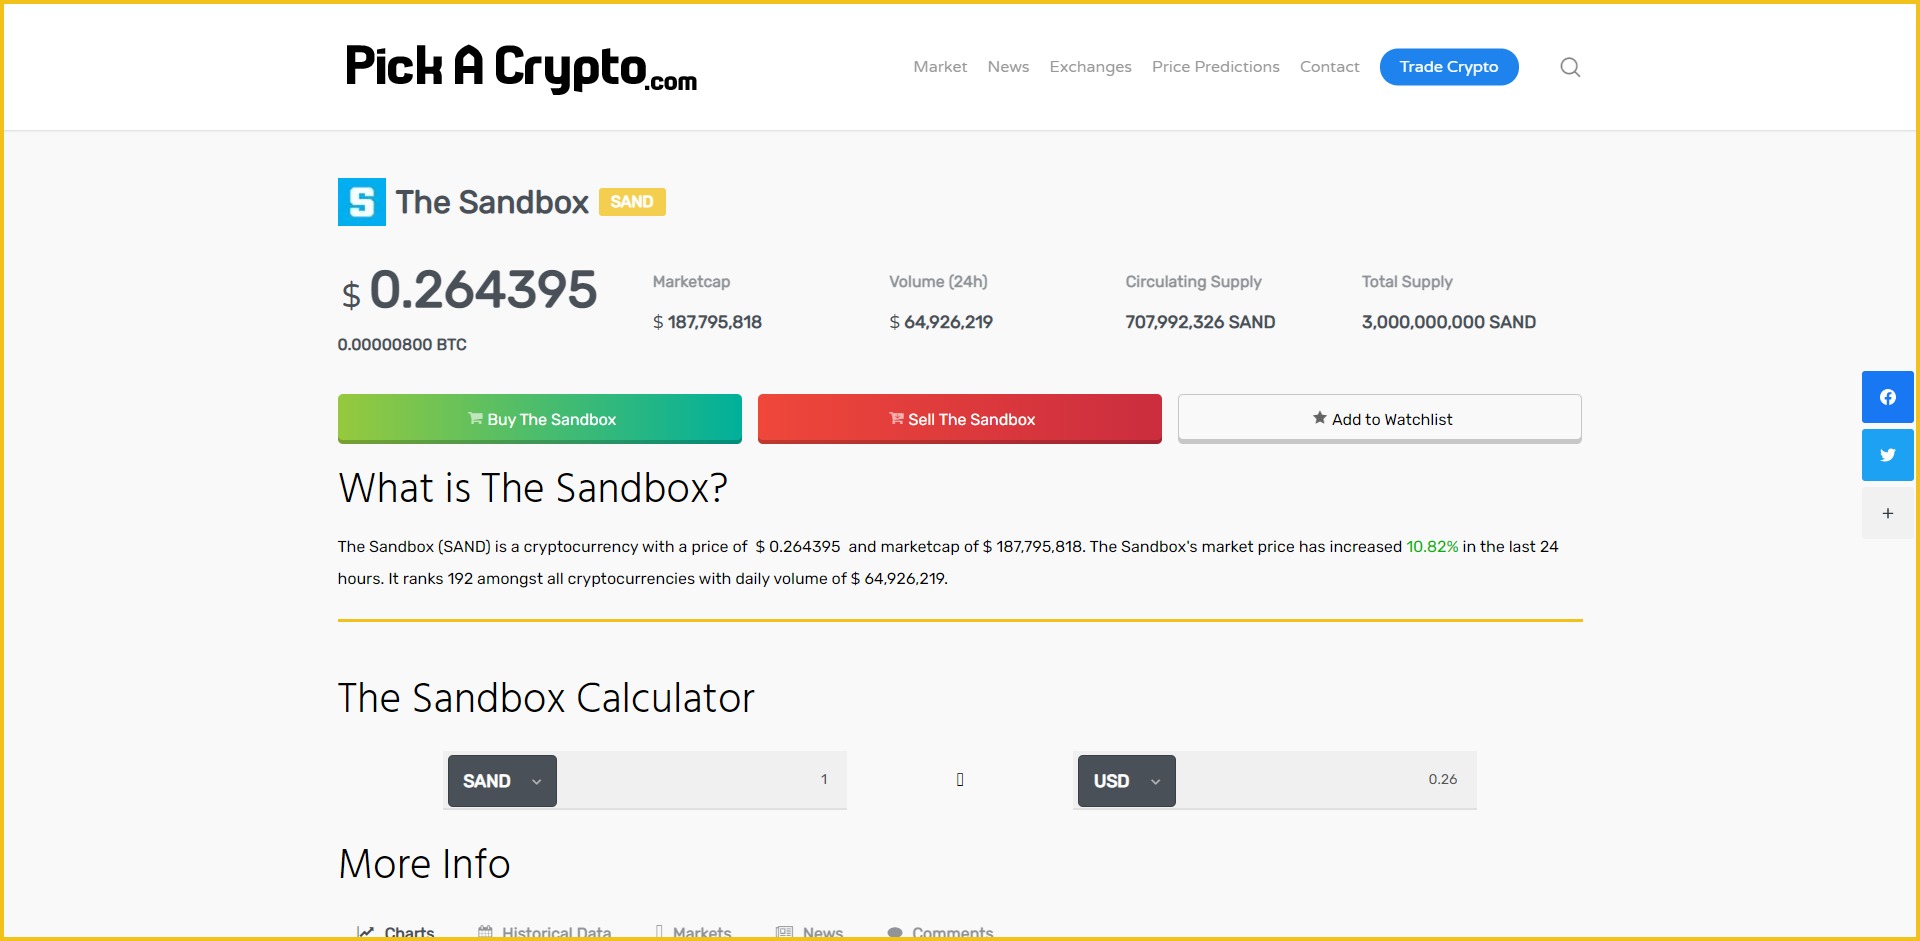 The Sandbox SAND Price Prediction Market